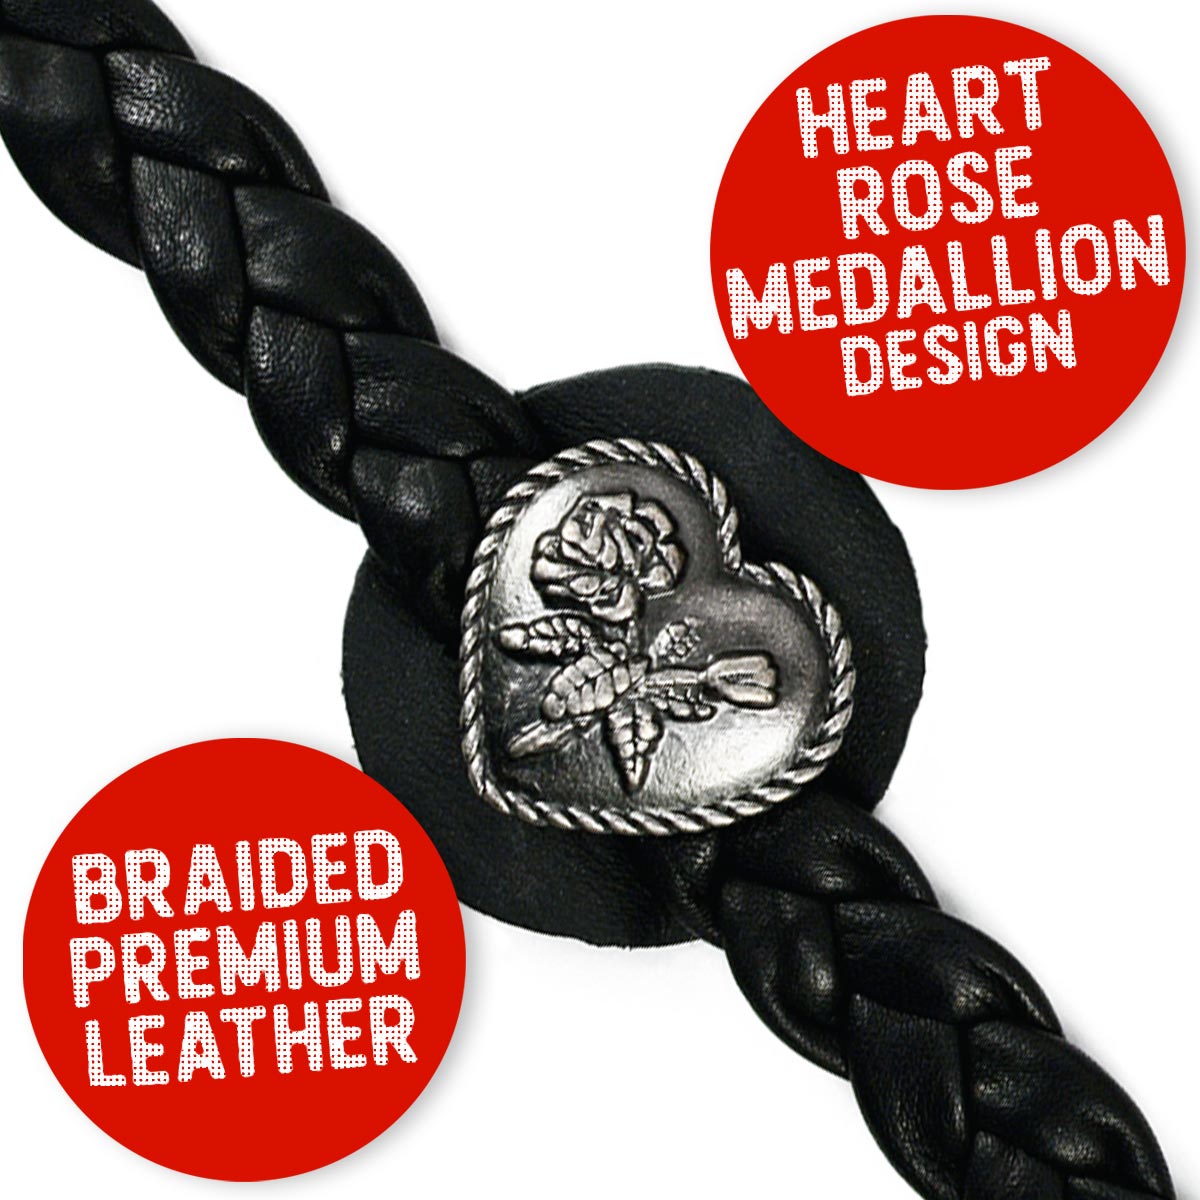 Milwaukee Leather Heart Medallion Vest Extender Genuine Leather Braided Strap 6.5" Extension 4-PCS MLA6067SET